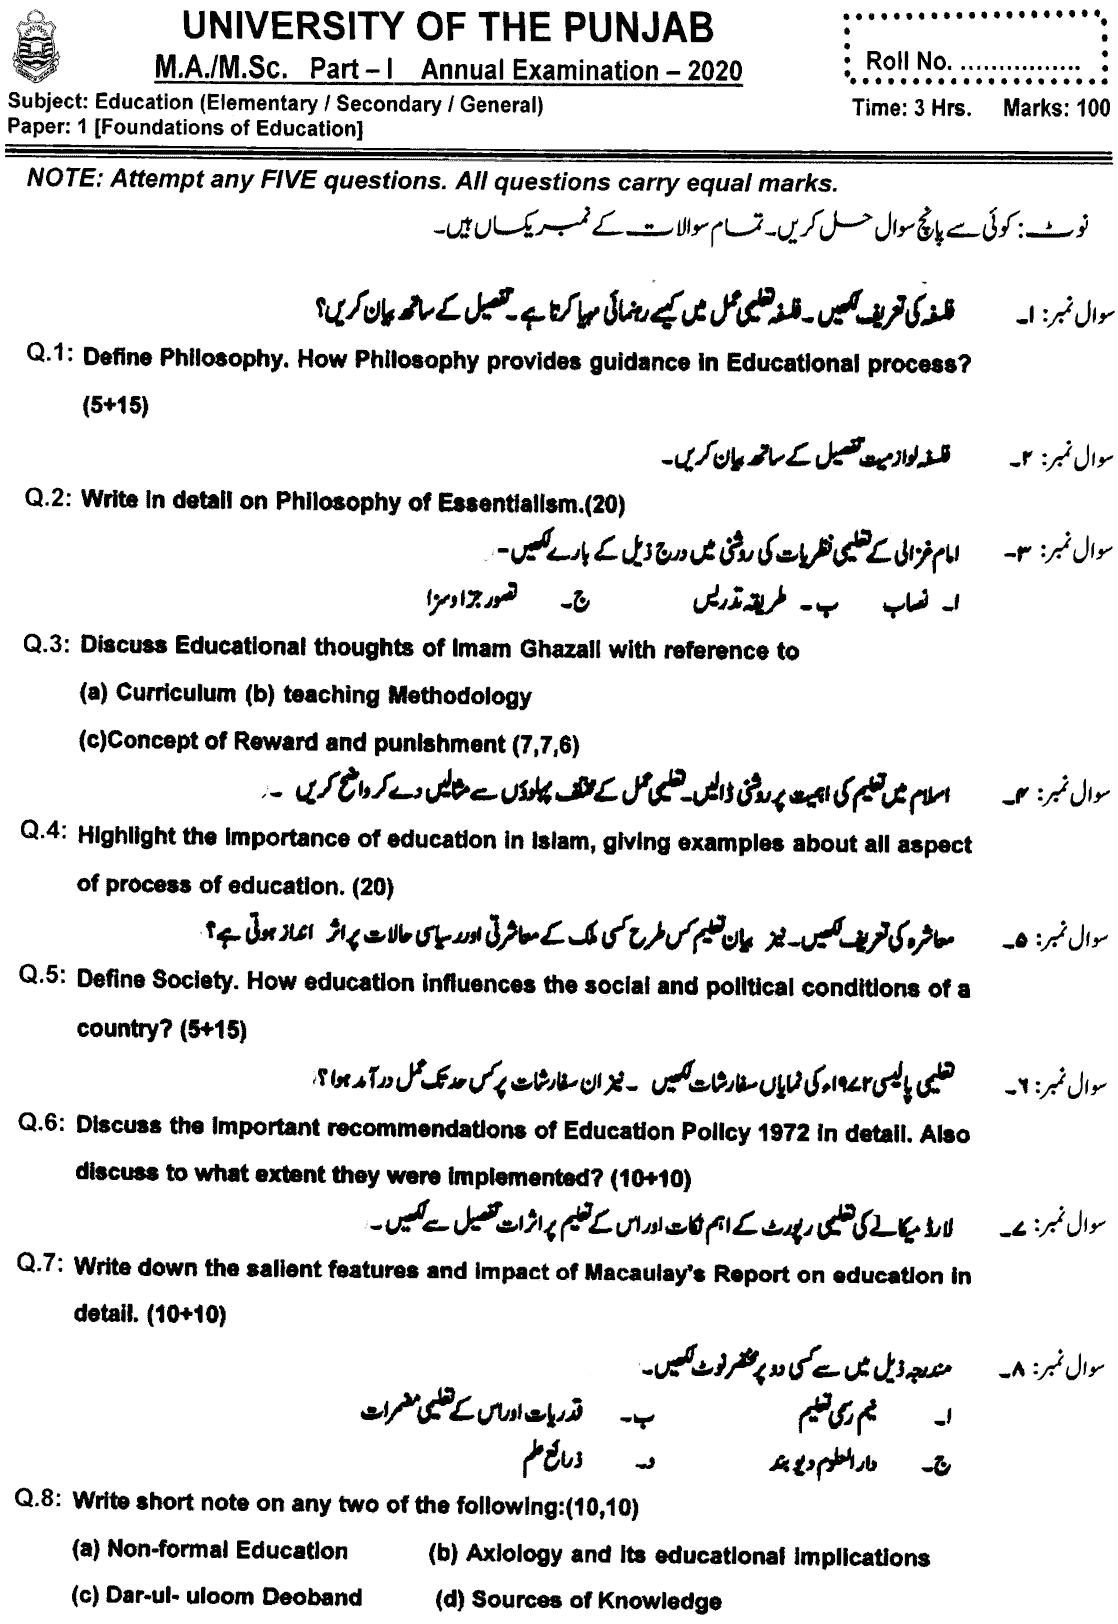 Ma Part 1 Education Elementary Foundations Of Education Past Paper 2020 Punjab University